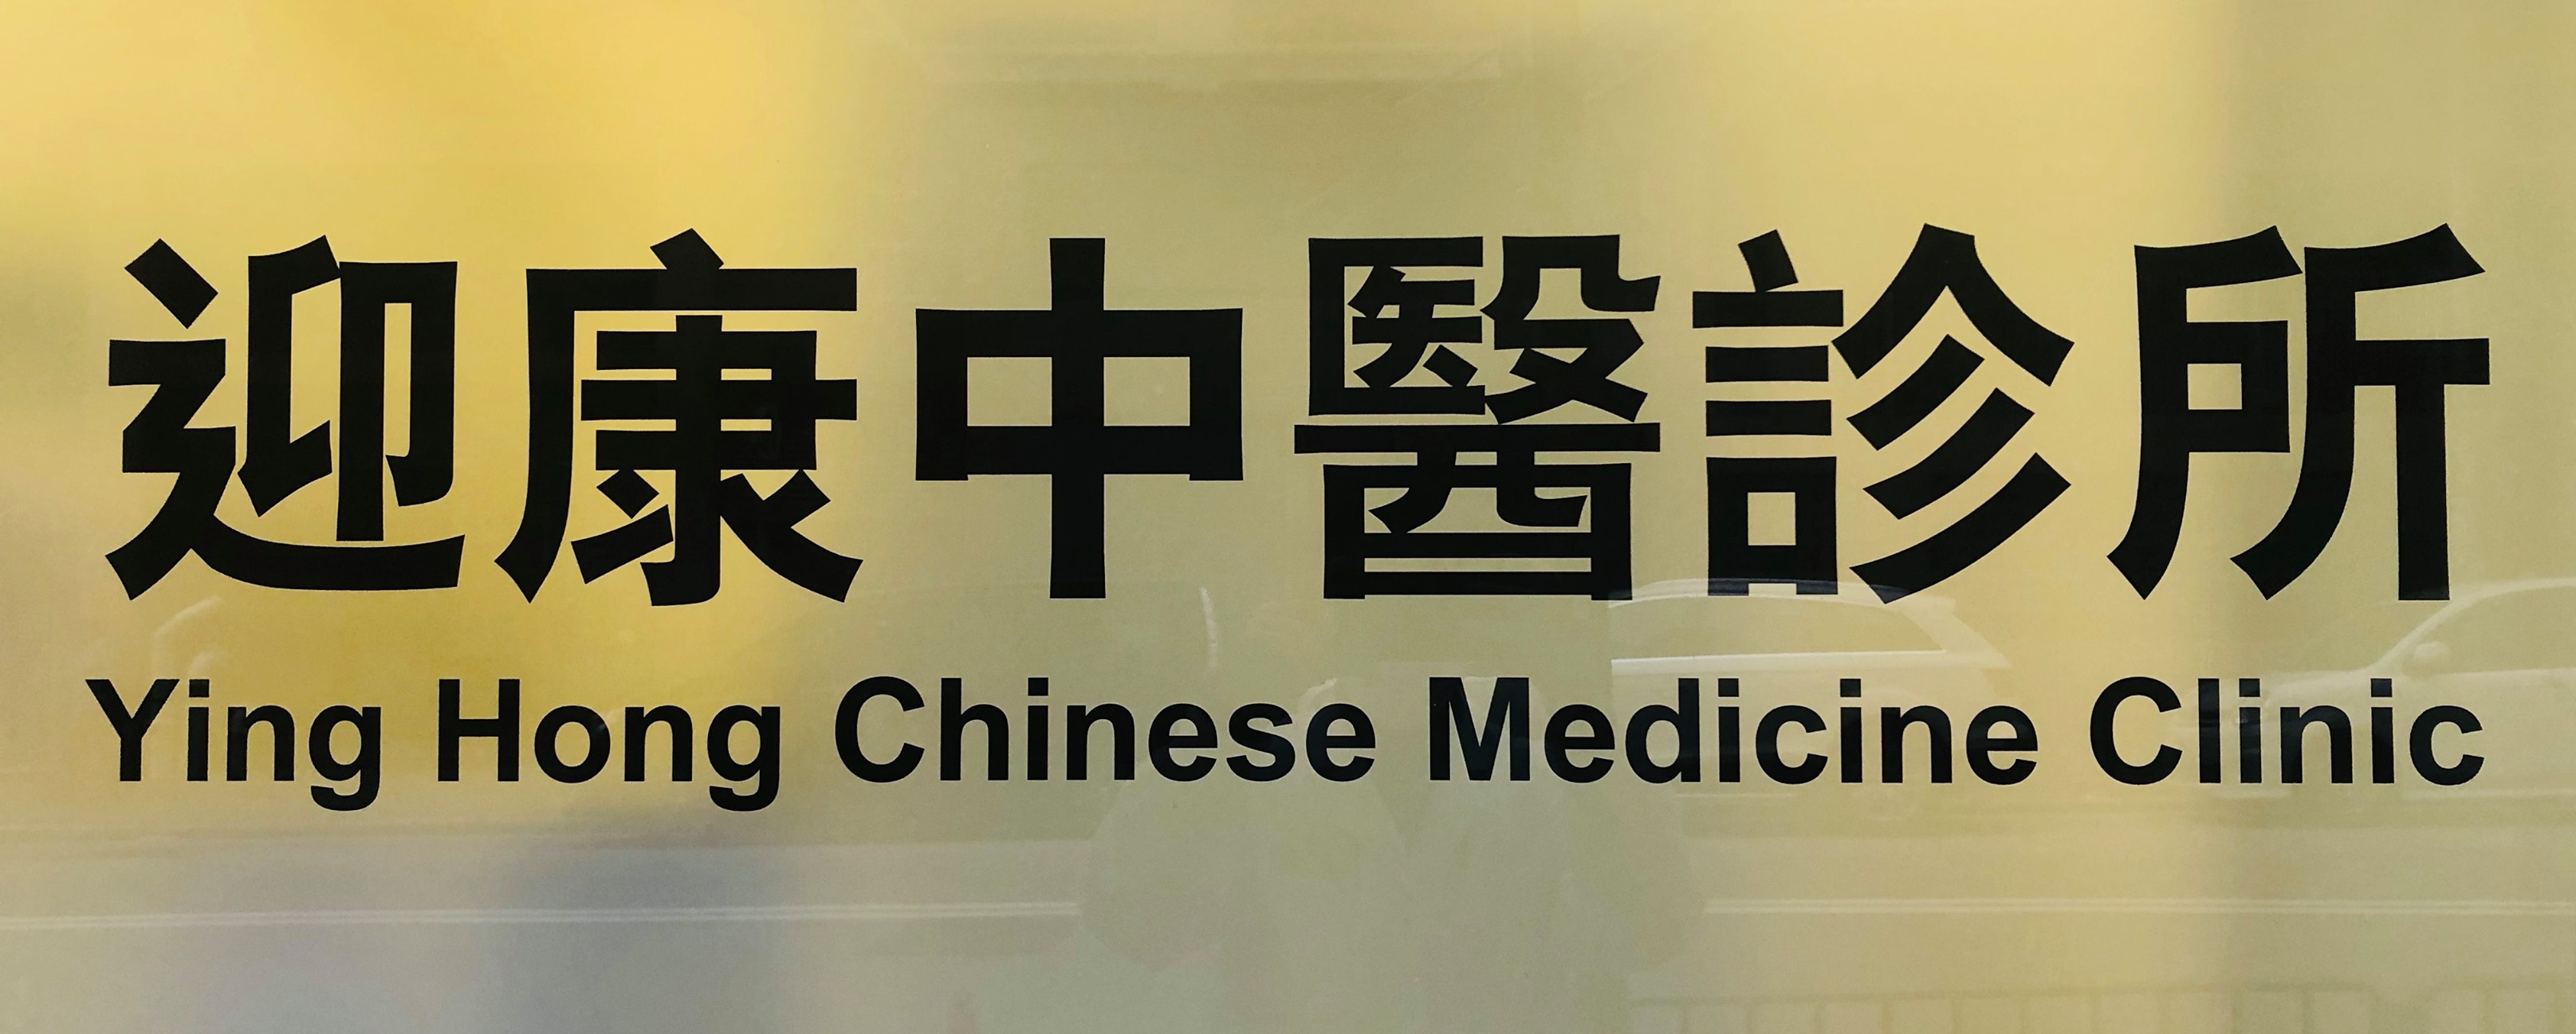 Traditional Chinese Medicine Clinic: 迎康中醫診所